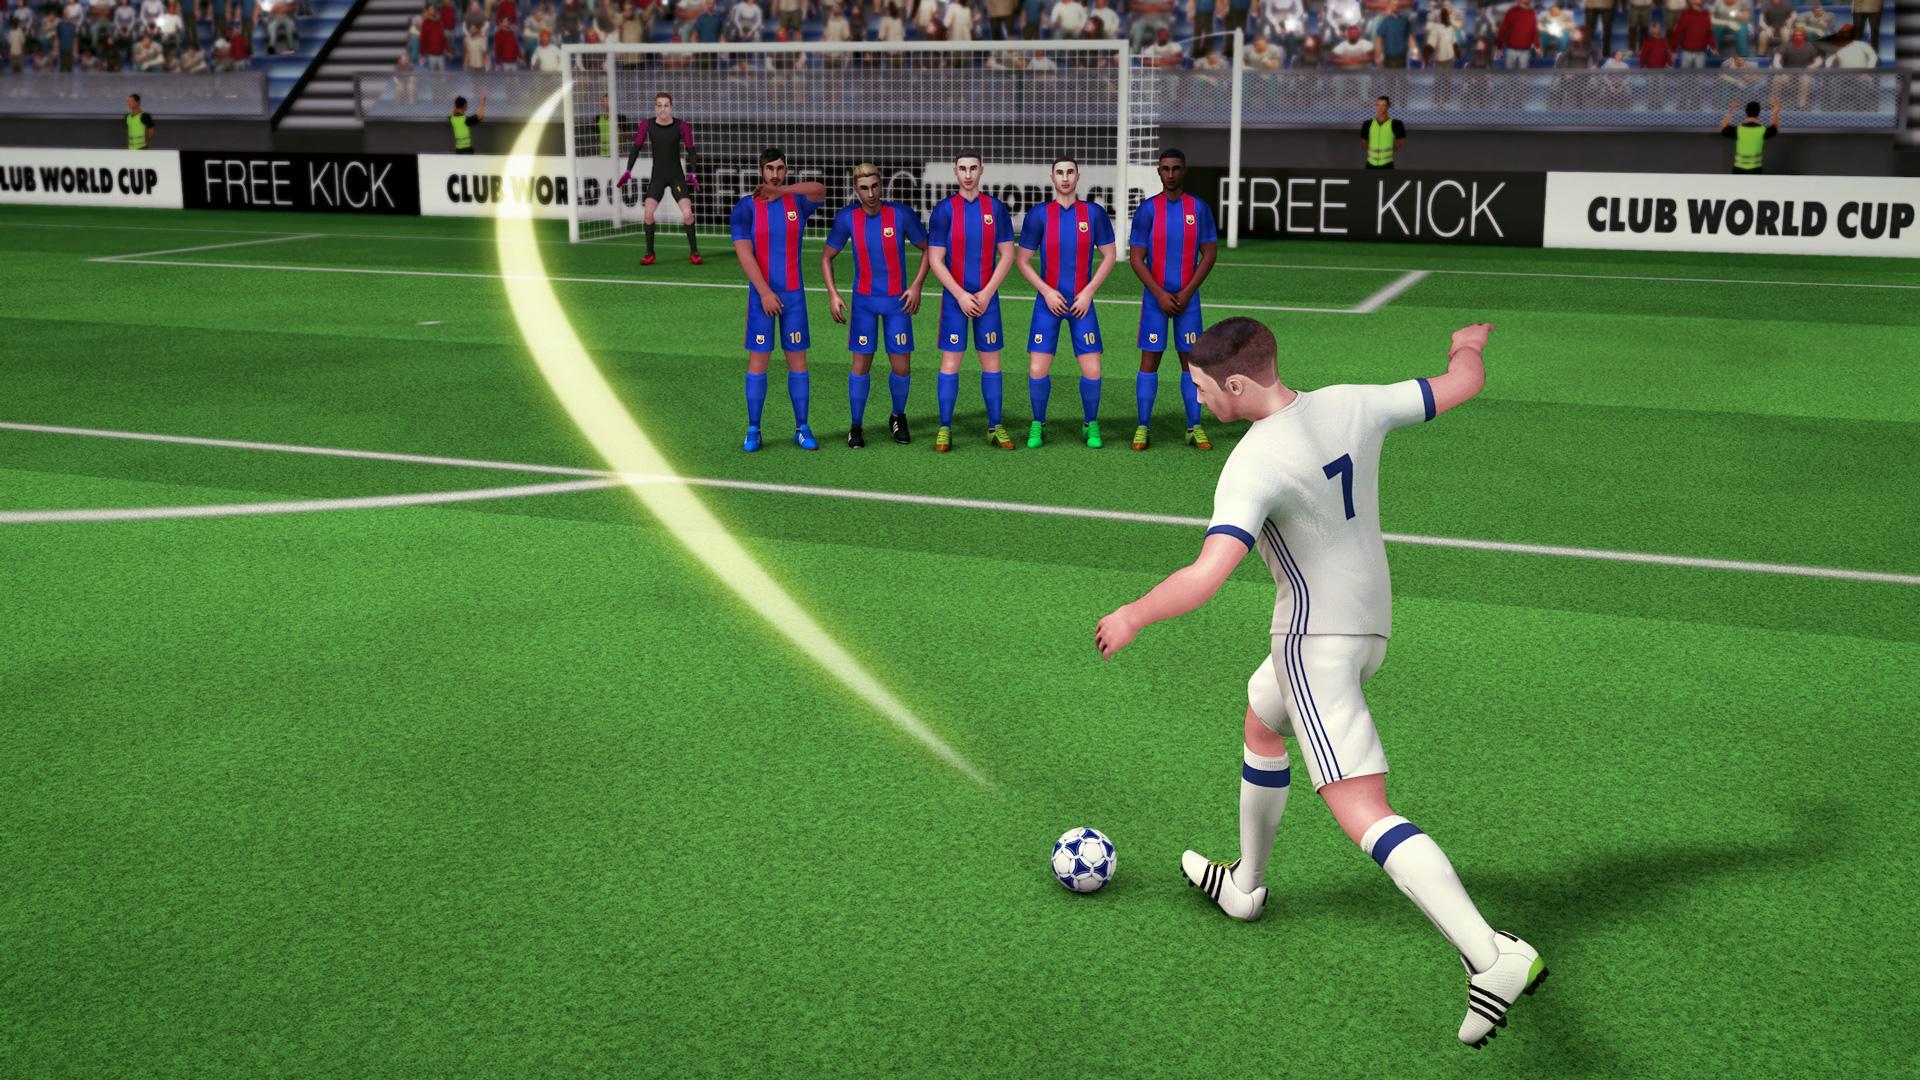 Screenshot 1 of Free Kick Club World Cup 17 